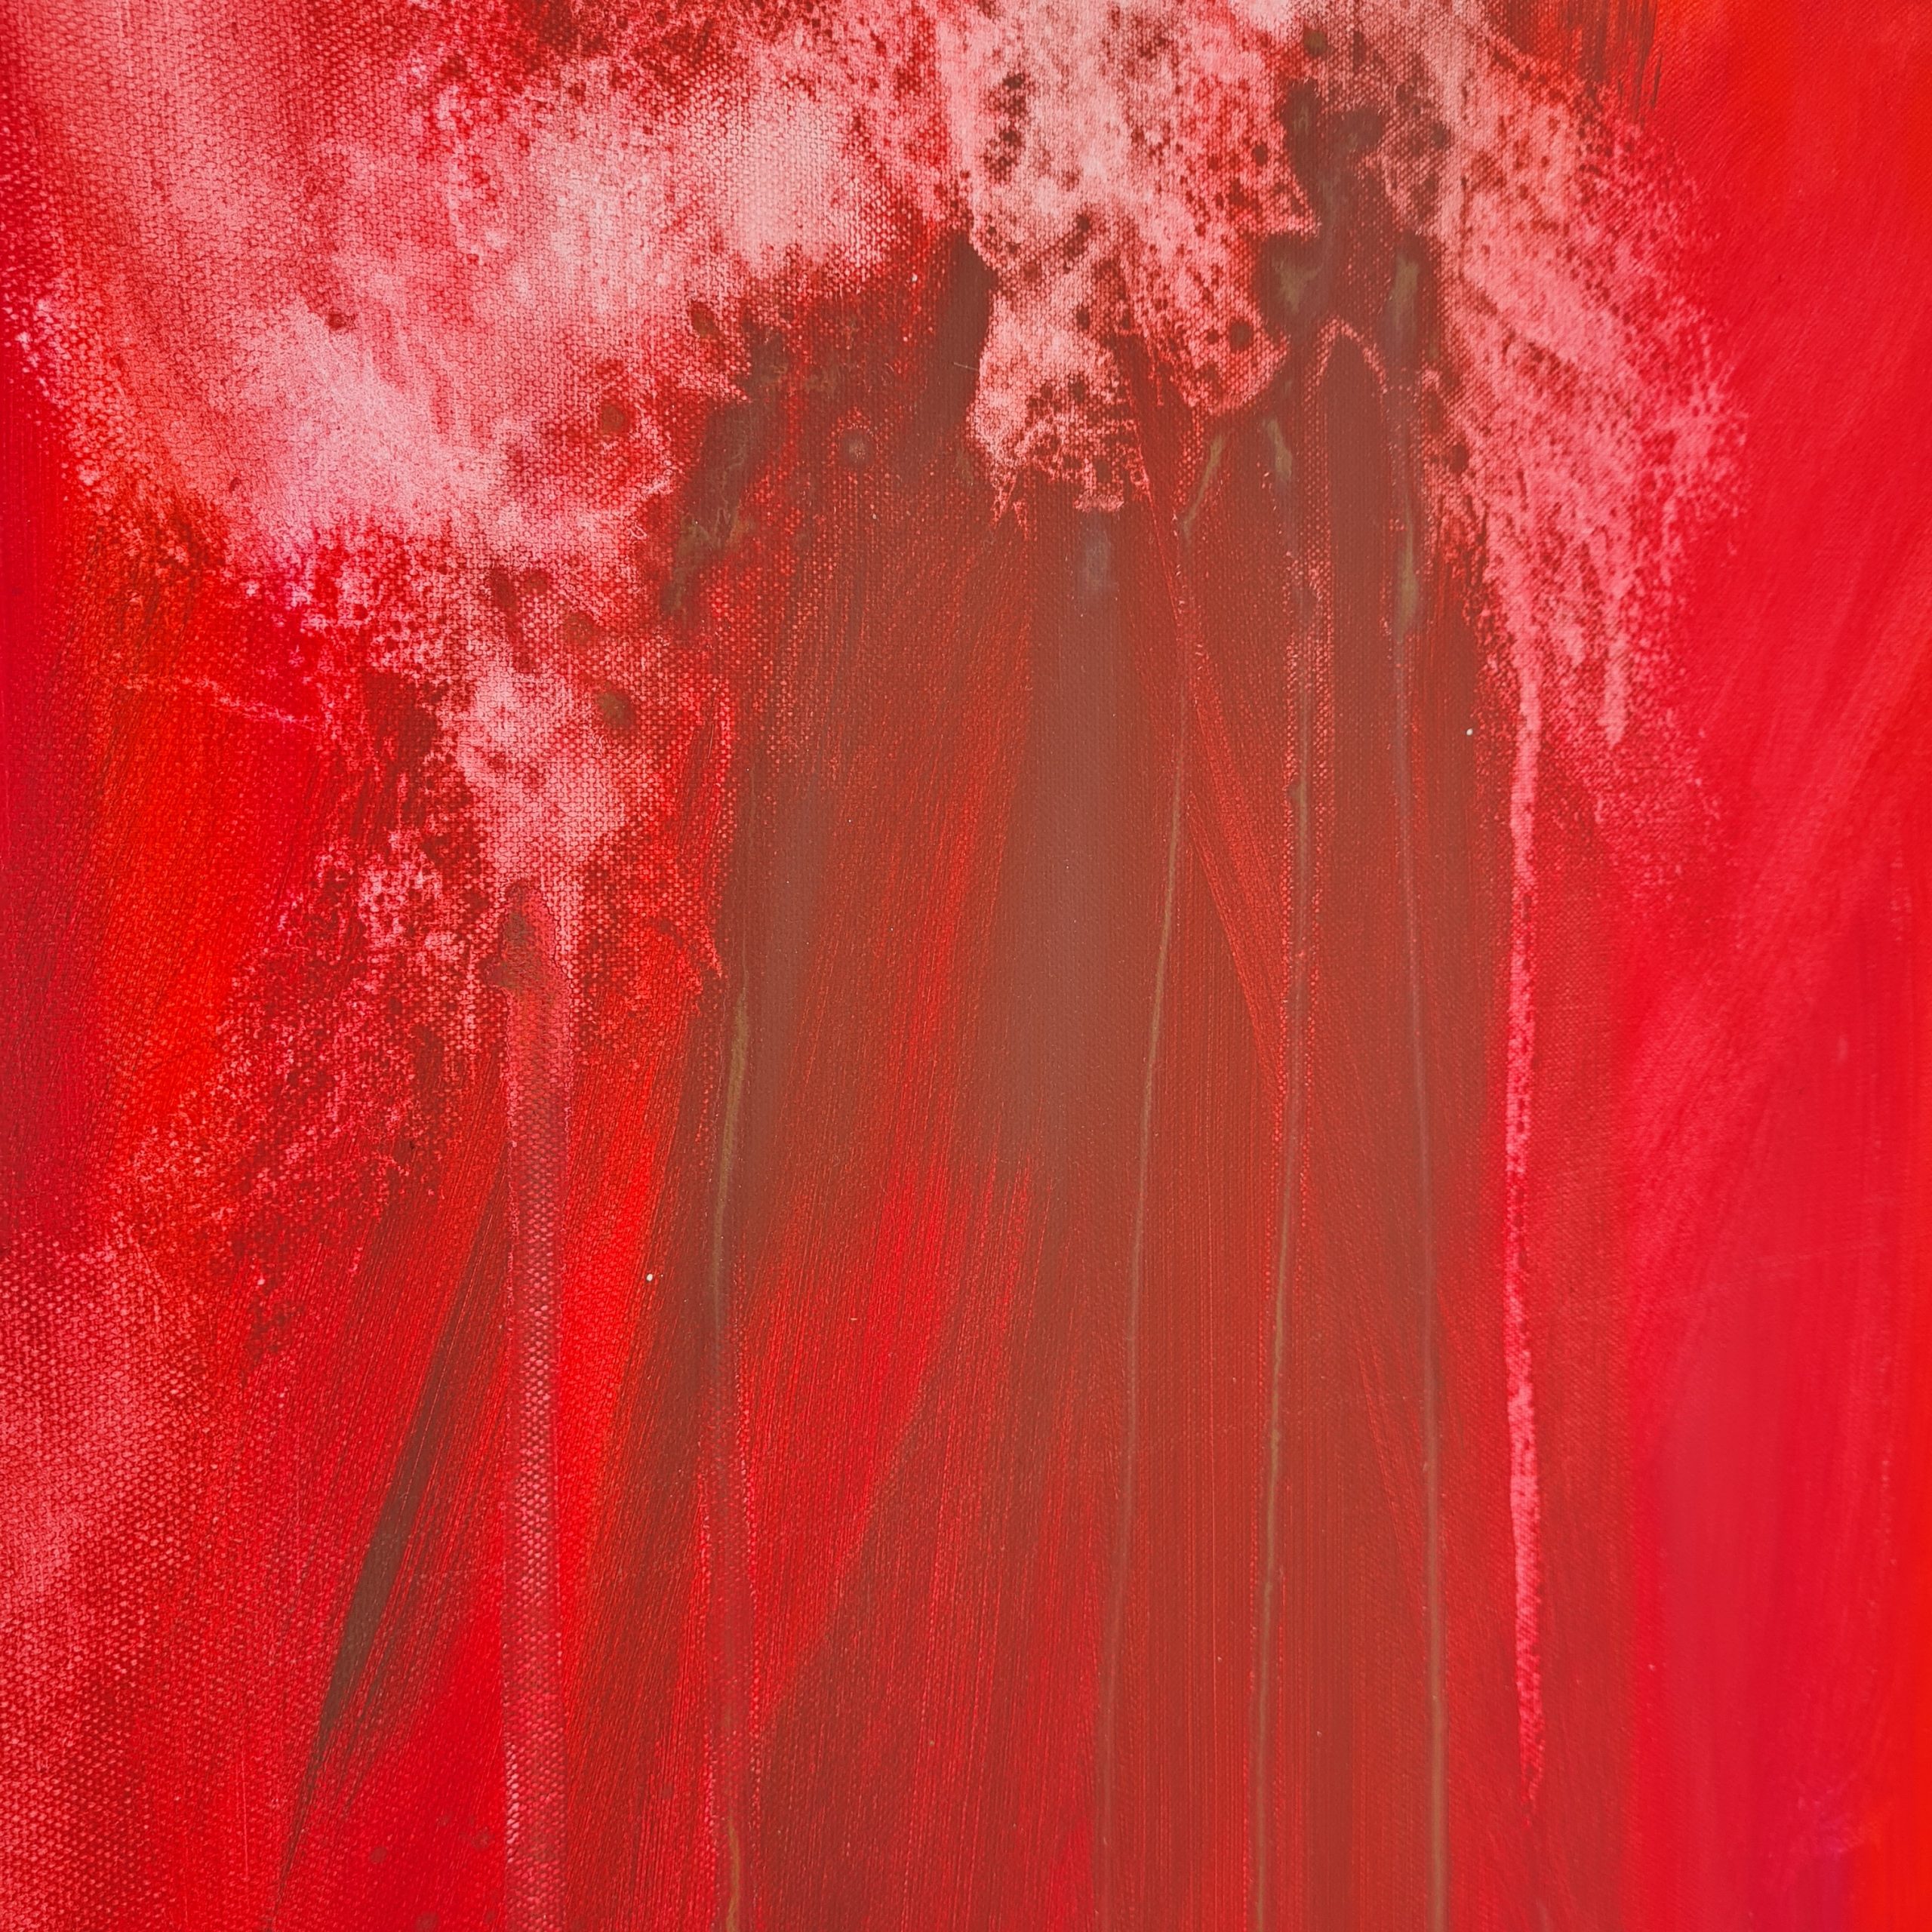 Abstrakte Kunst in blutrot; abstract art in bloodred 5